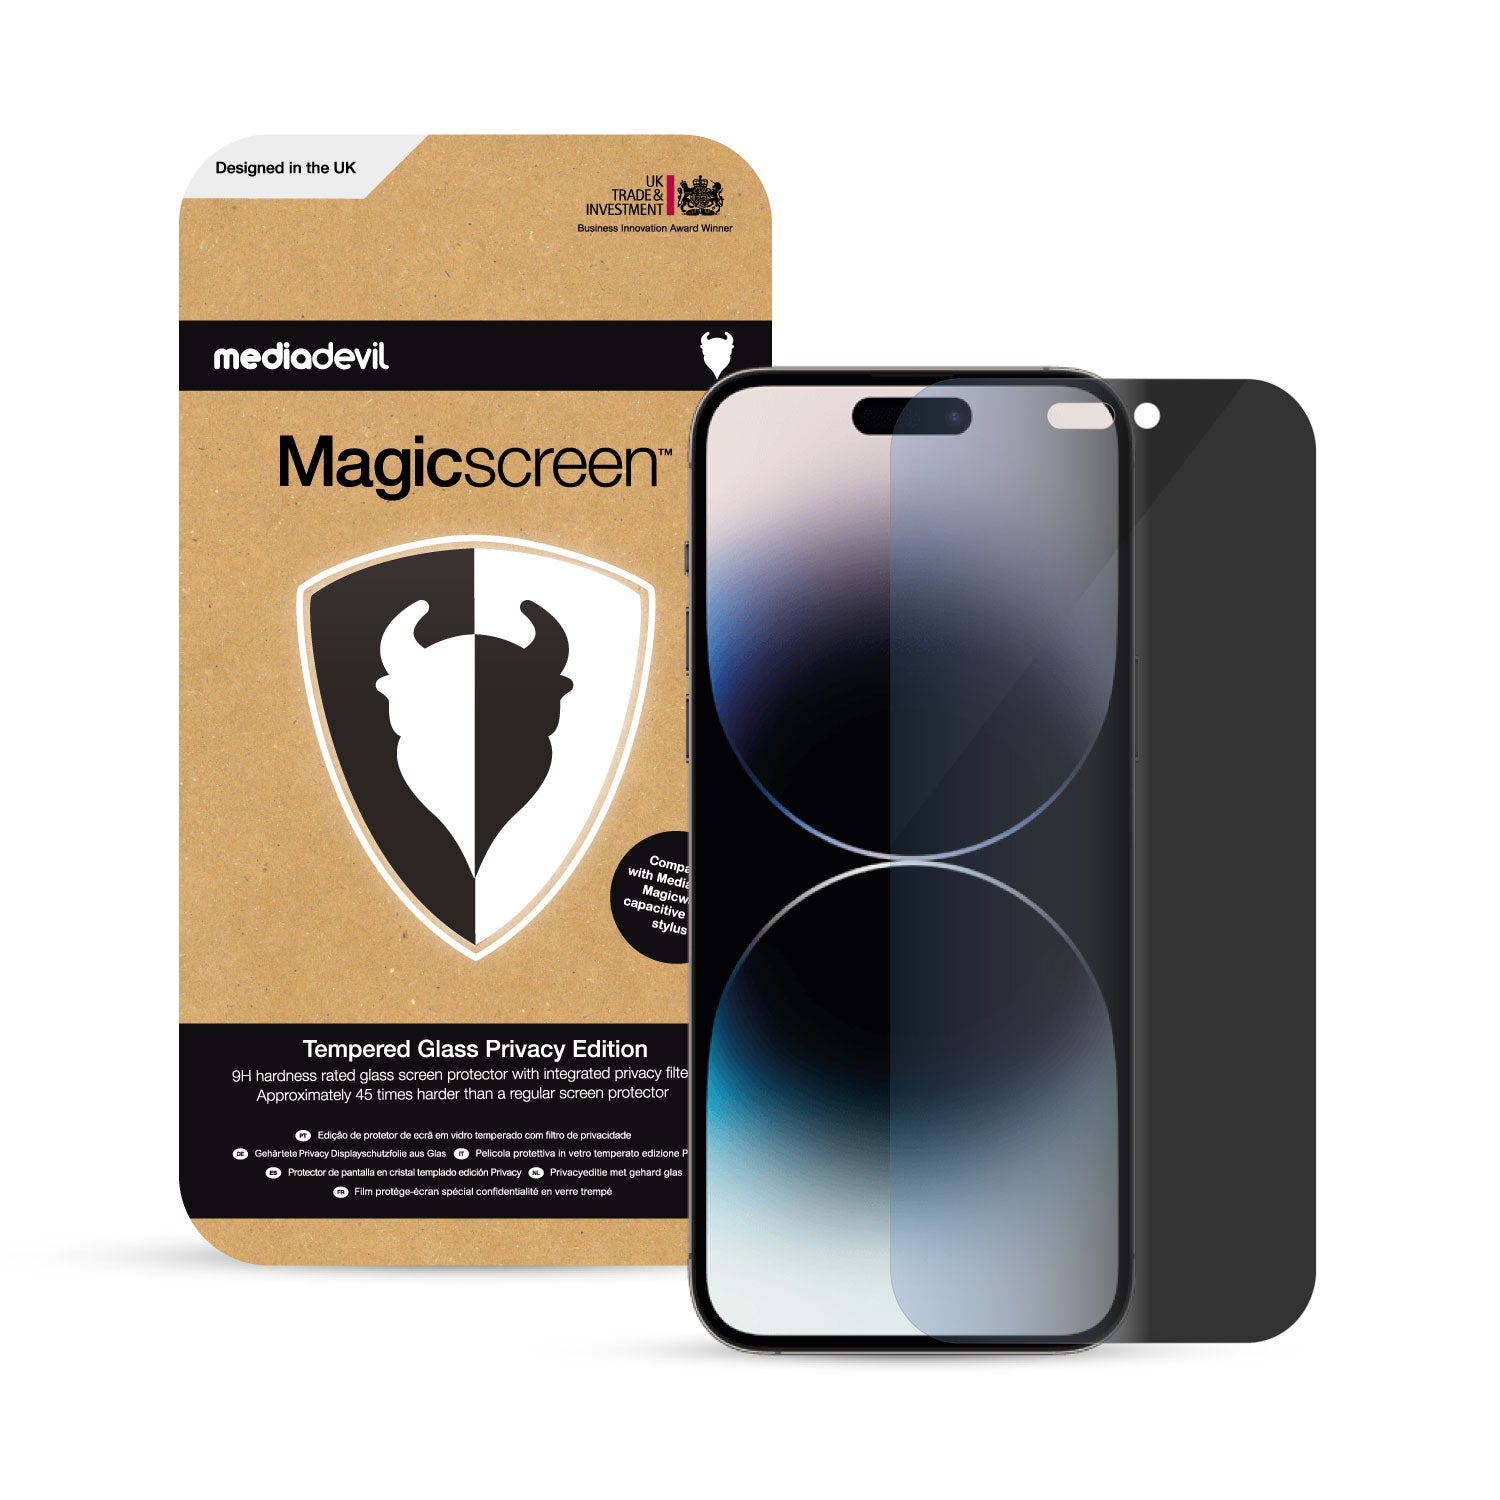 Protector pantalla iPhone 15 Plus y iPhone 14 Pro Max Belkin